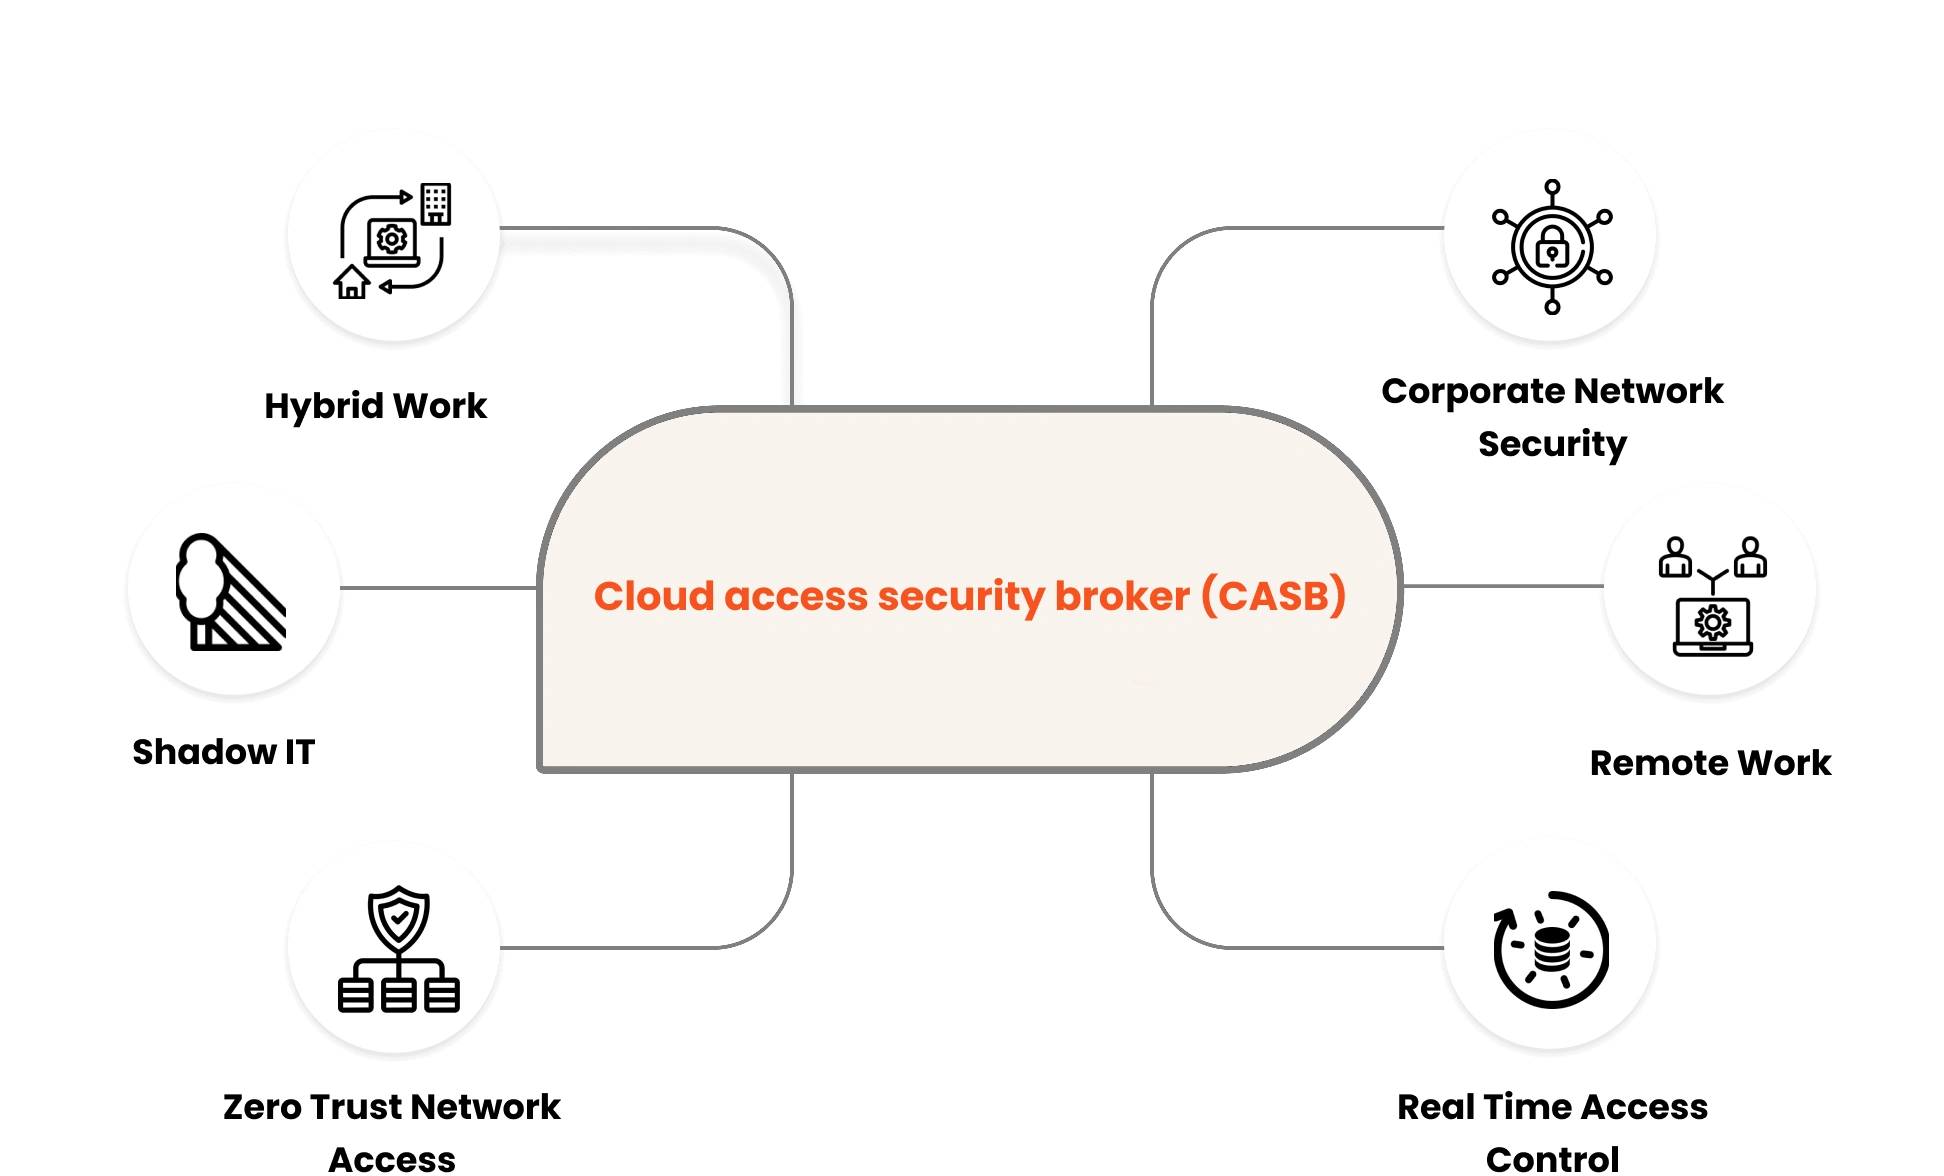 Cloud access security broker (CASB) solutions